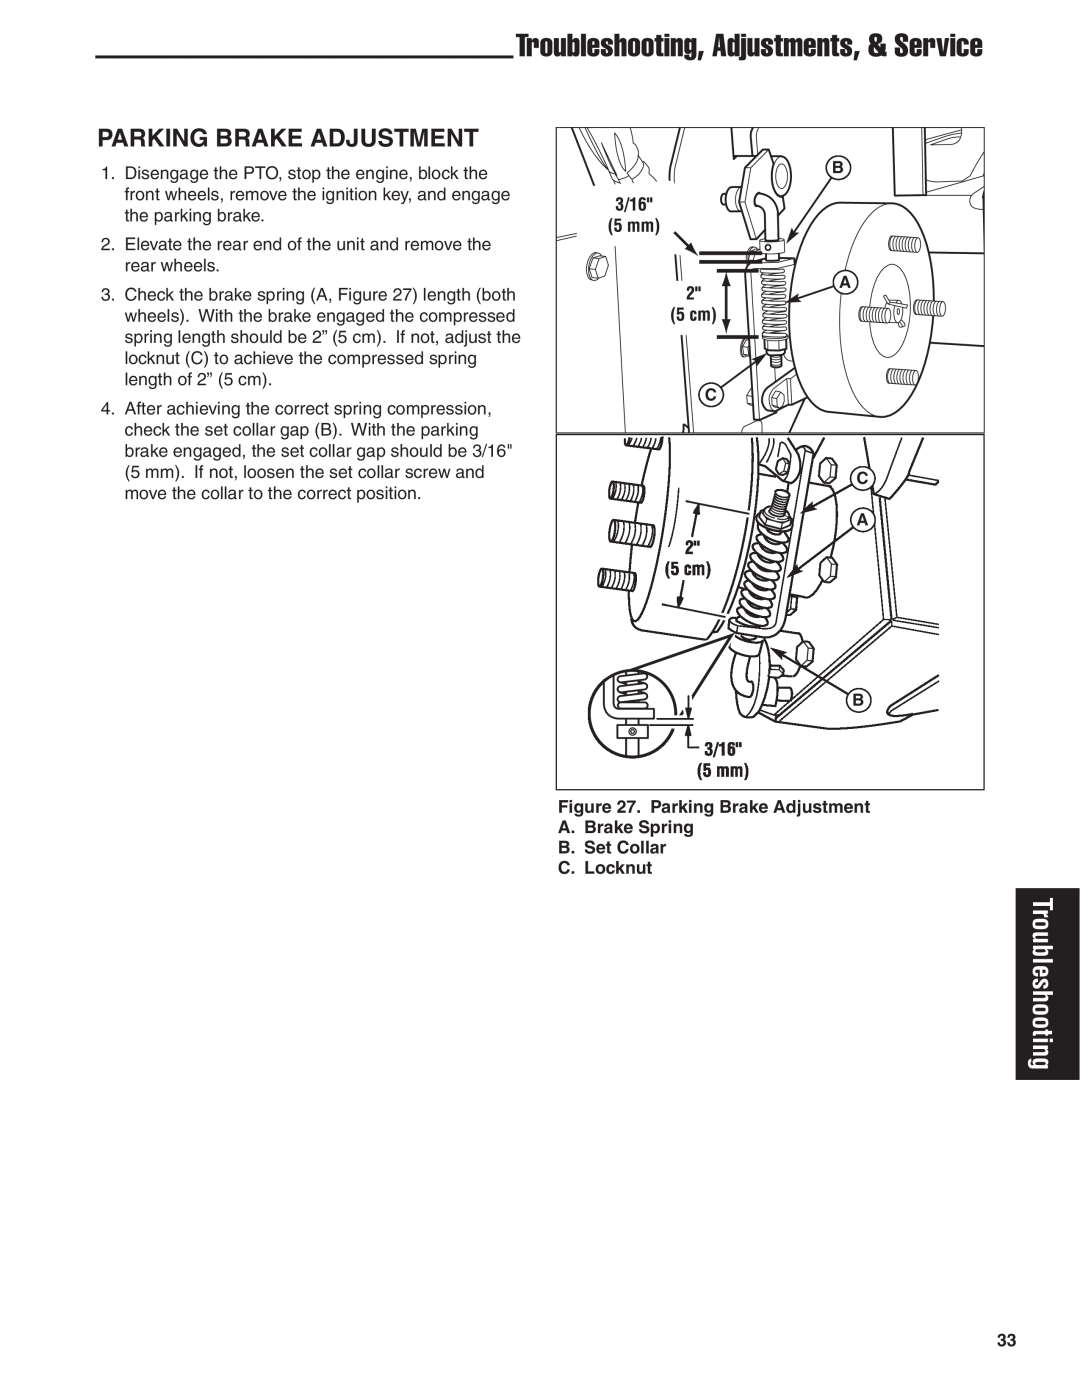 Snapper 18HP Parking Brake Adjustment, Troubleshooting, Adjustments, & Service, A.Brake Spring B.Set Collar C.Locknut 